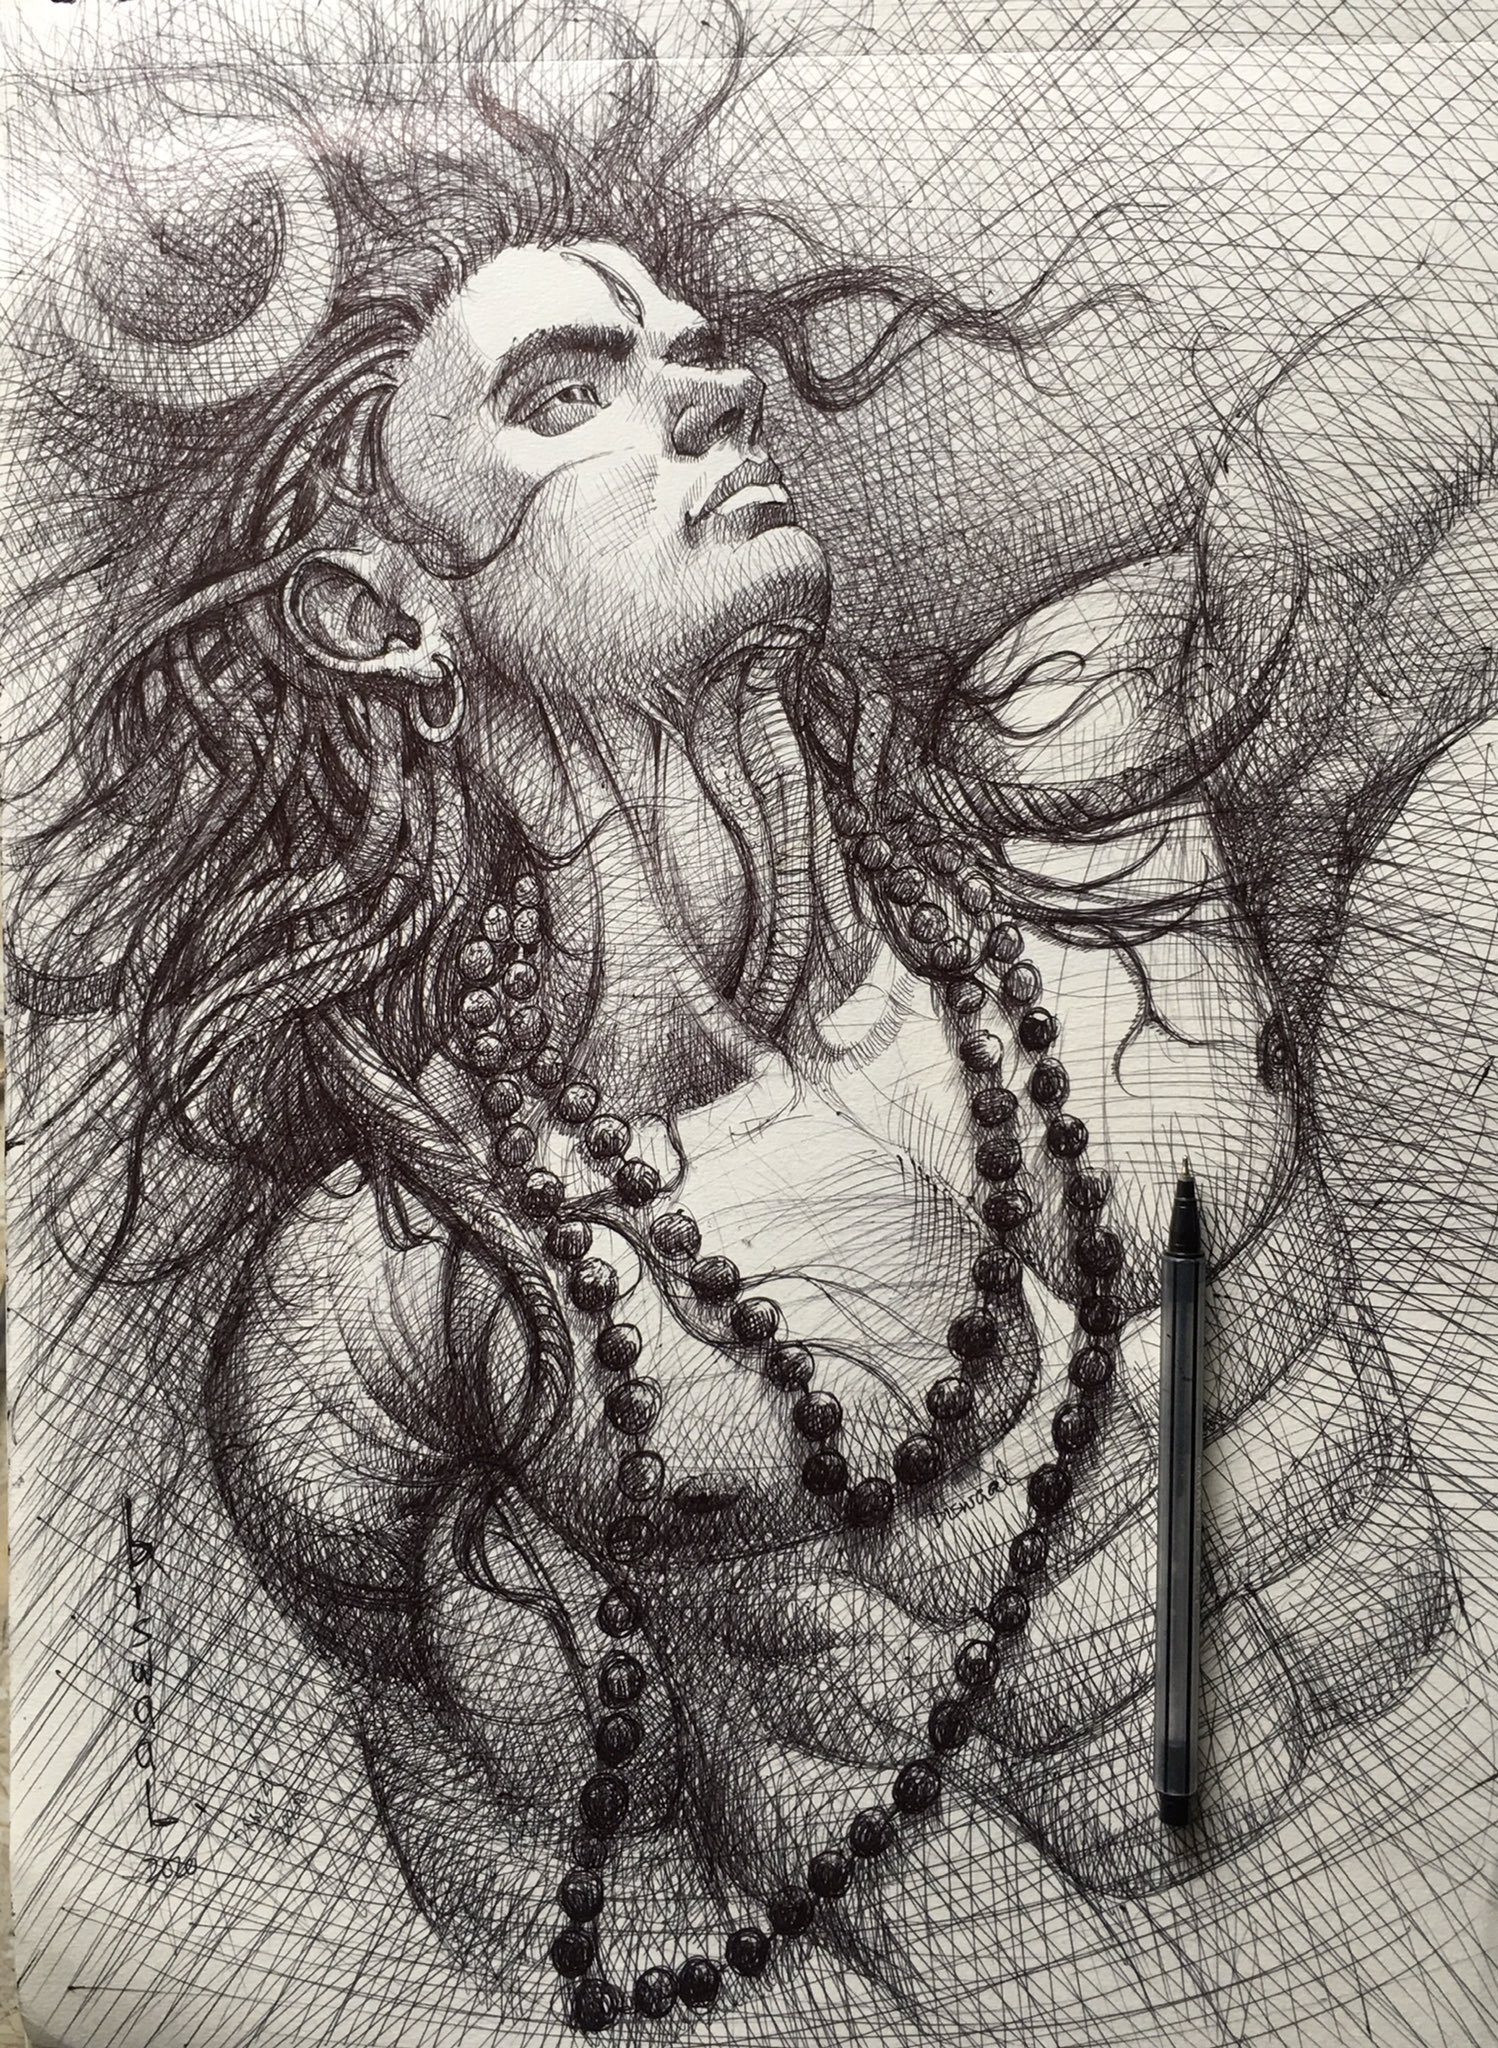 Lord Shiva Drawing Stock Illustration  Download Image Now  Shiva  Spiritual Enlightenment Art  iStock